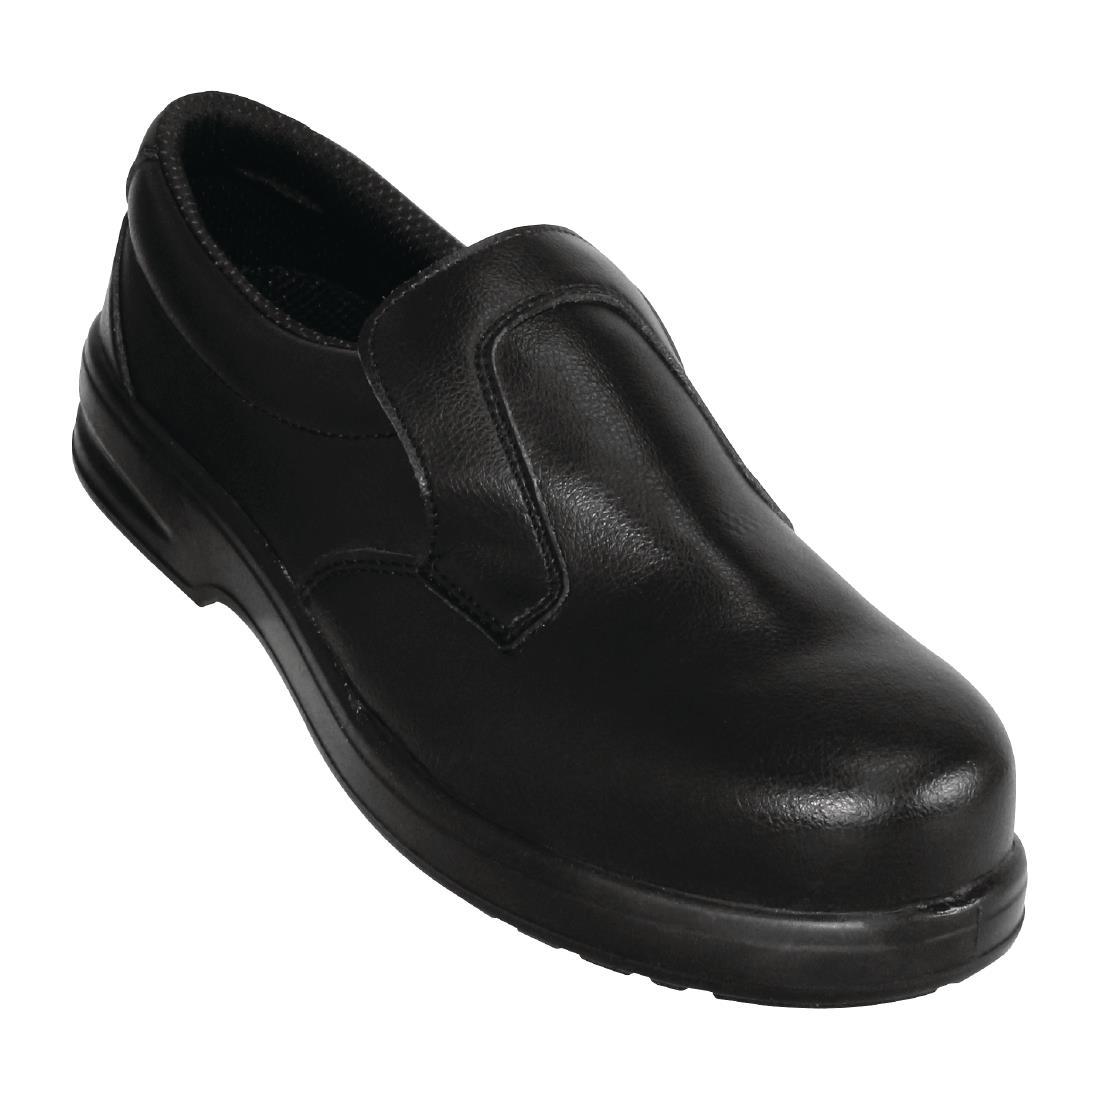 Slipbuster Lite Slip On Safety Shoes Black 37 - A845-37  - 2